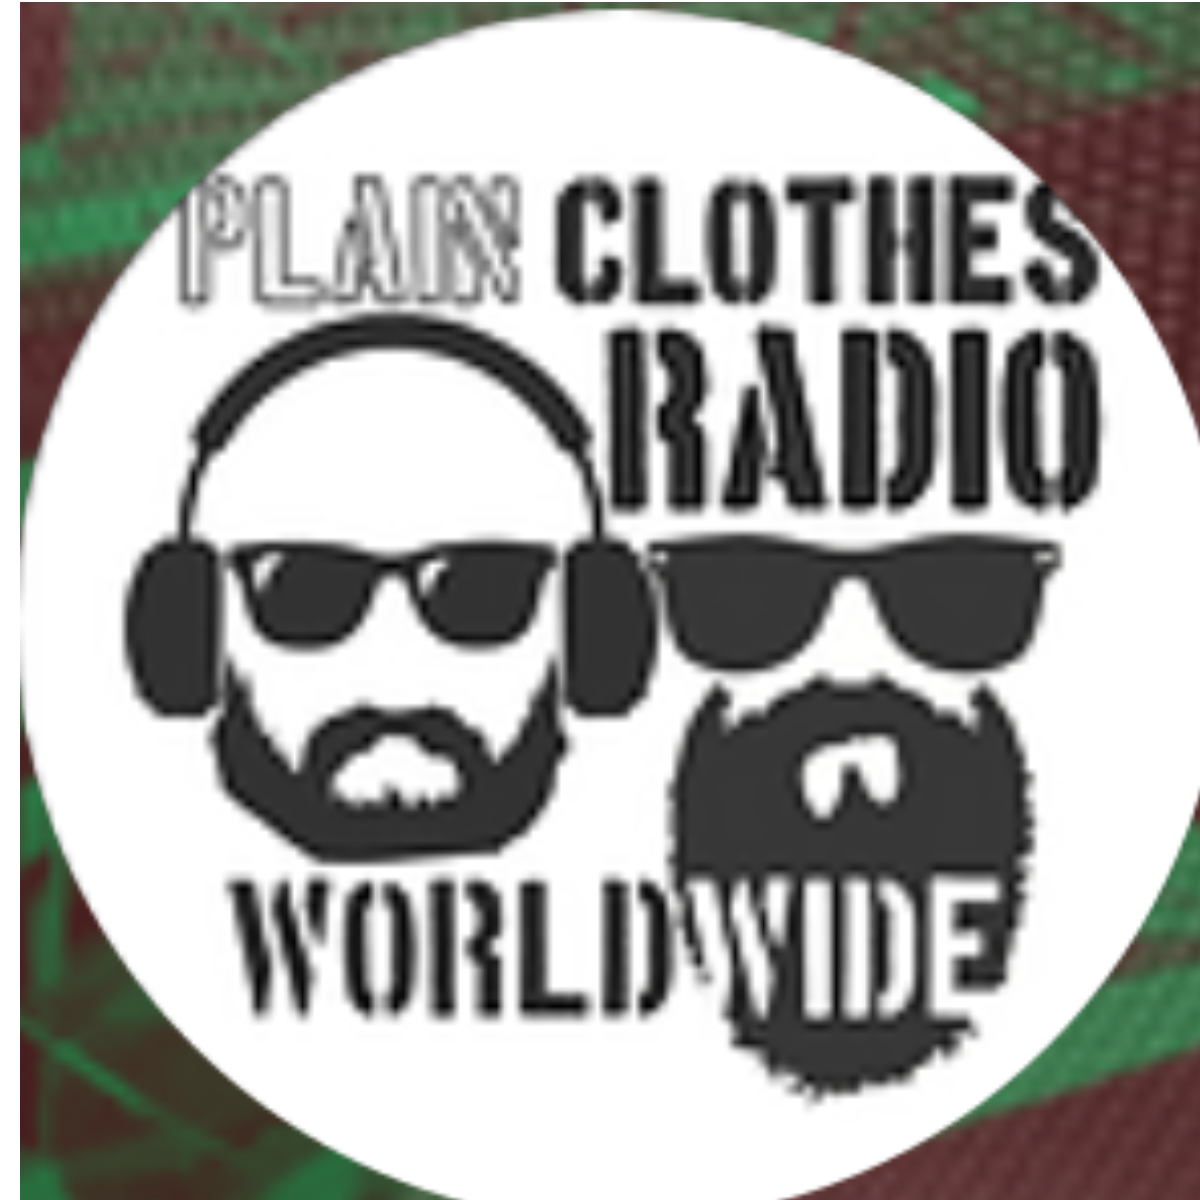 Plaincolthes Radio Worldwide